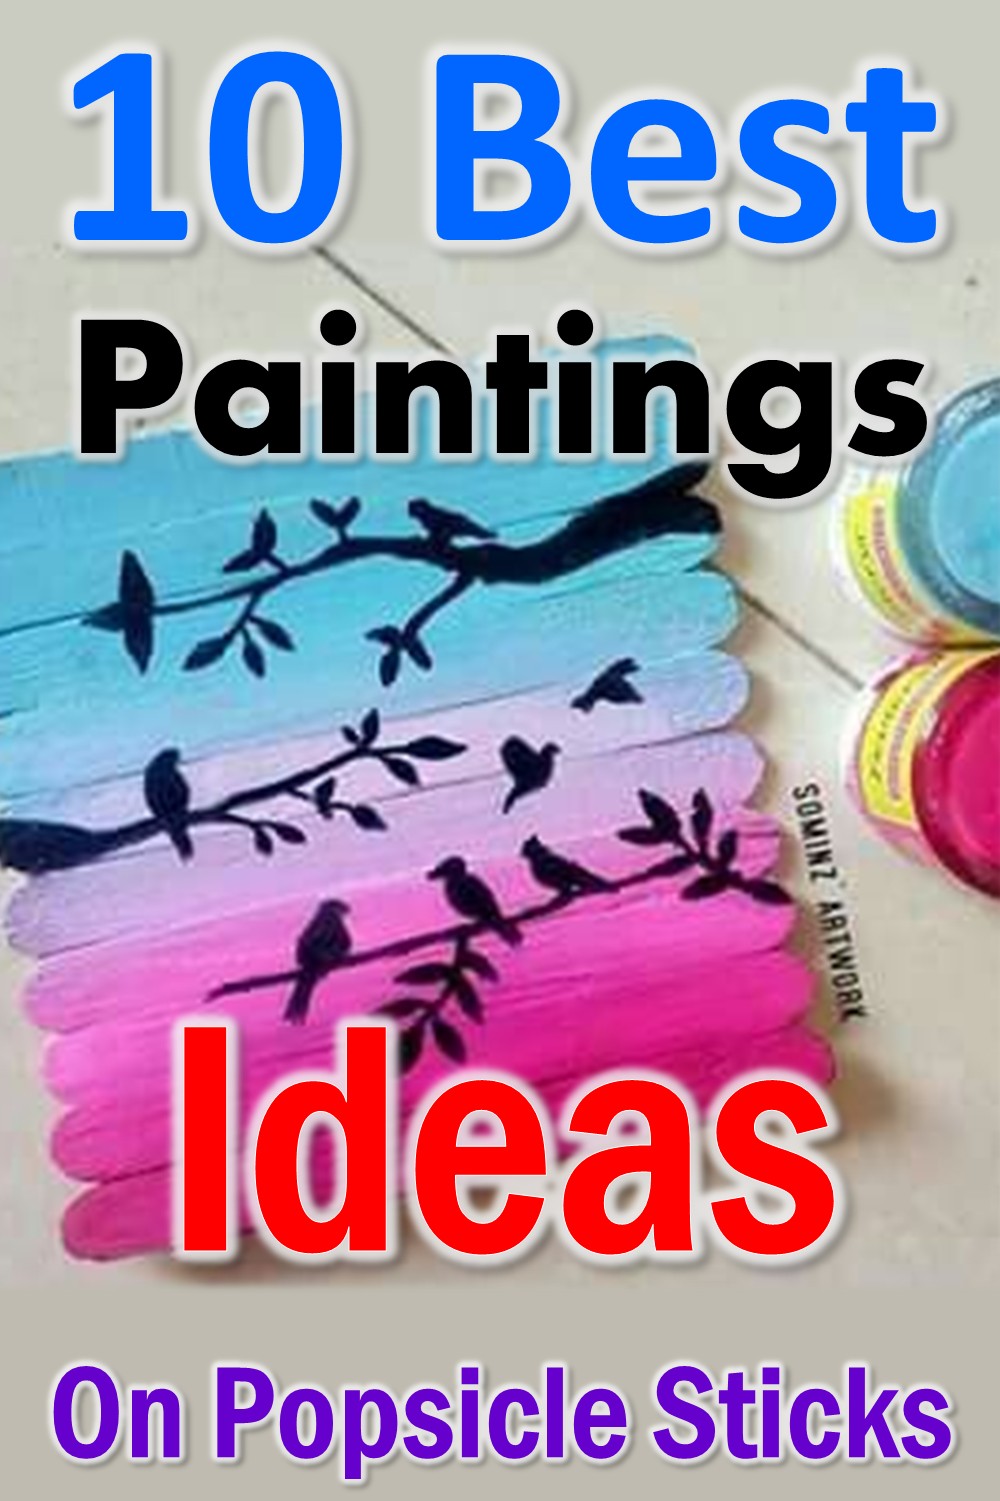 painting ideas Popsicle sticks